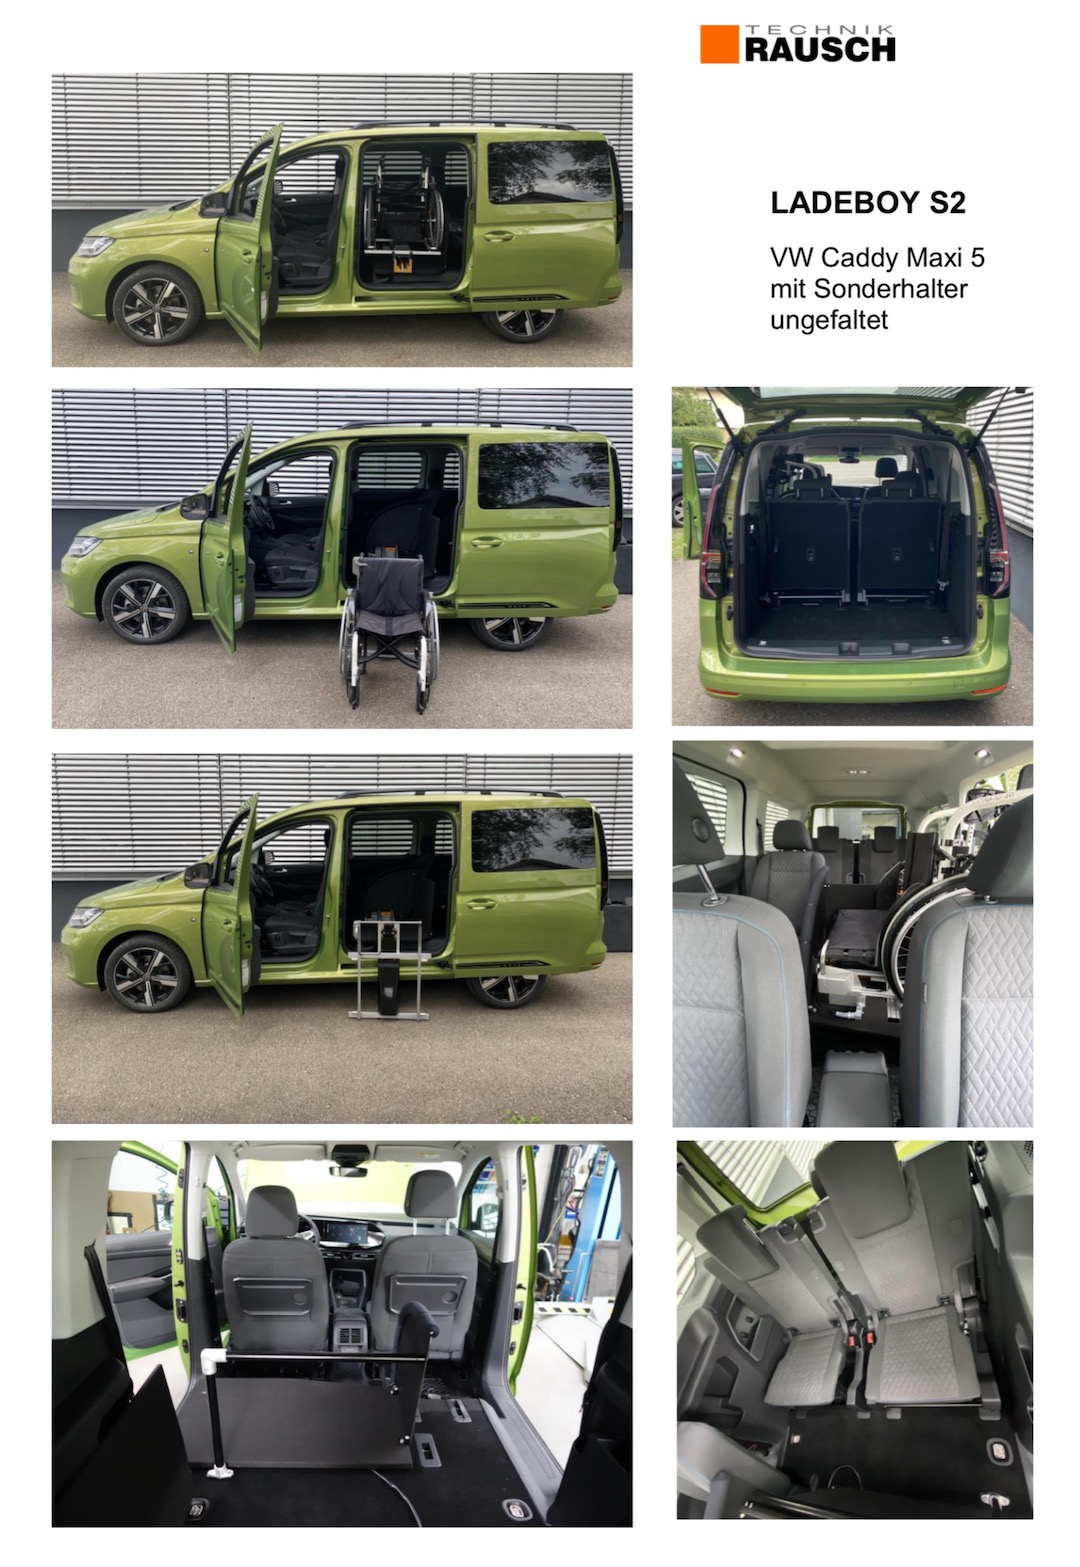 VW Caddy Maxi 5 inklusive Umbau